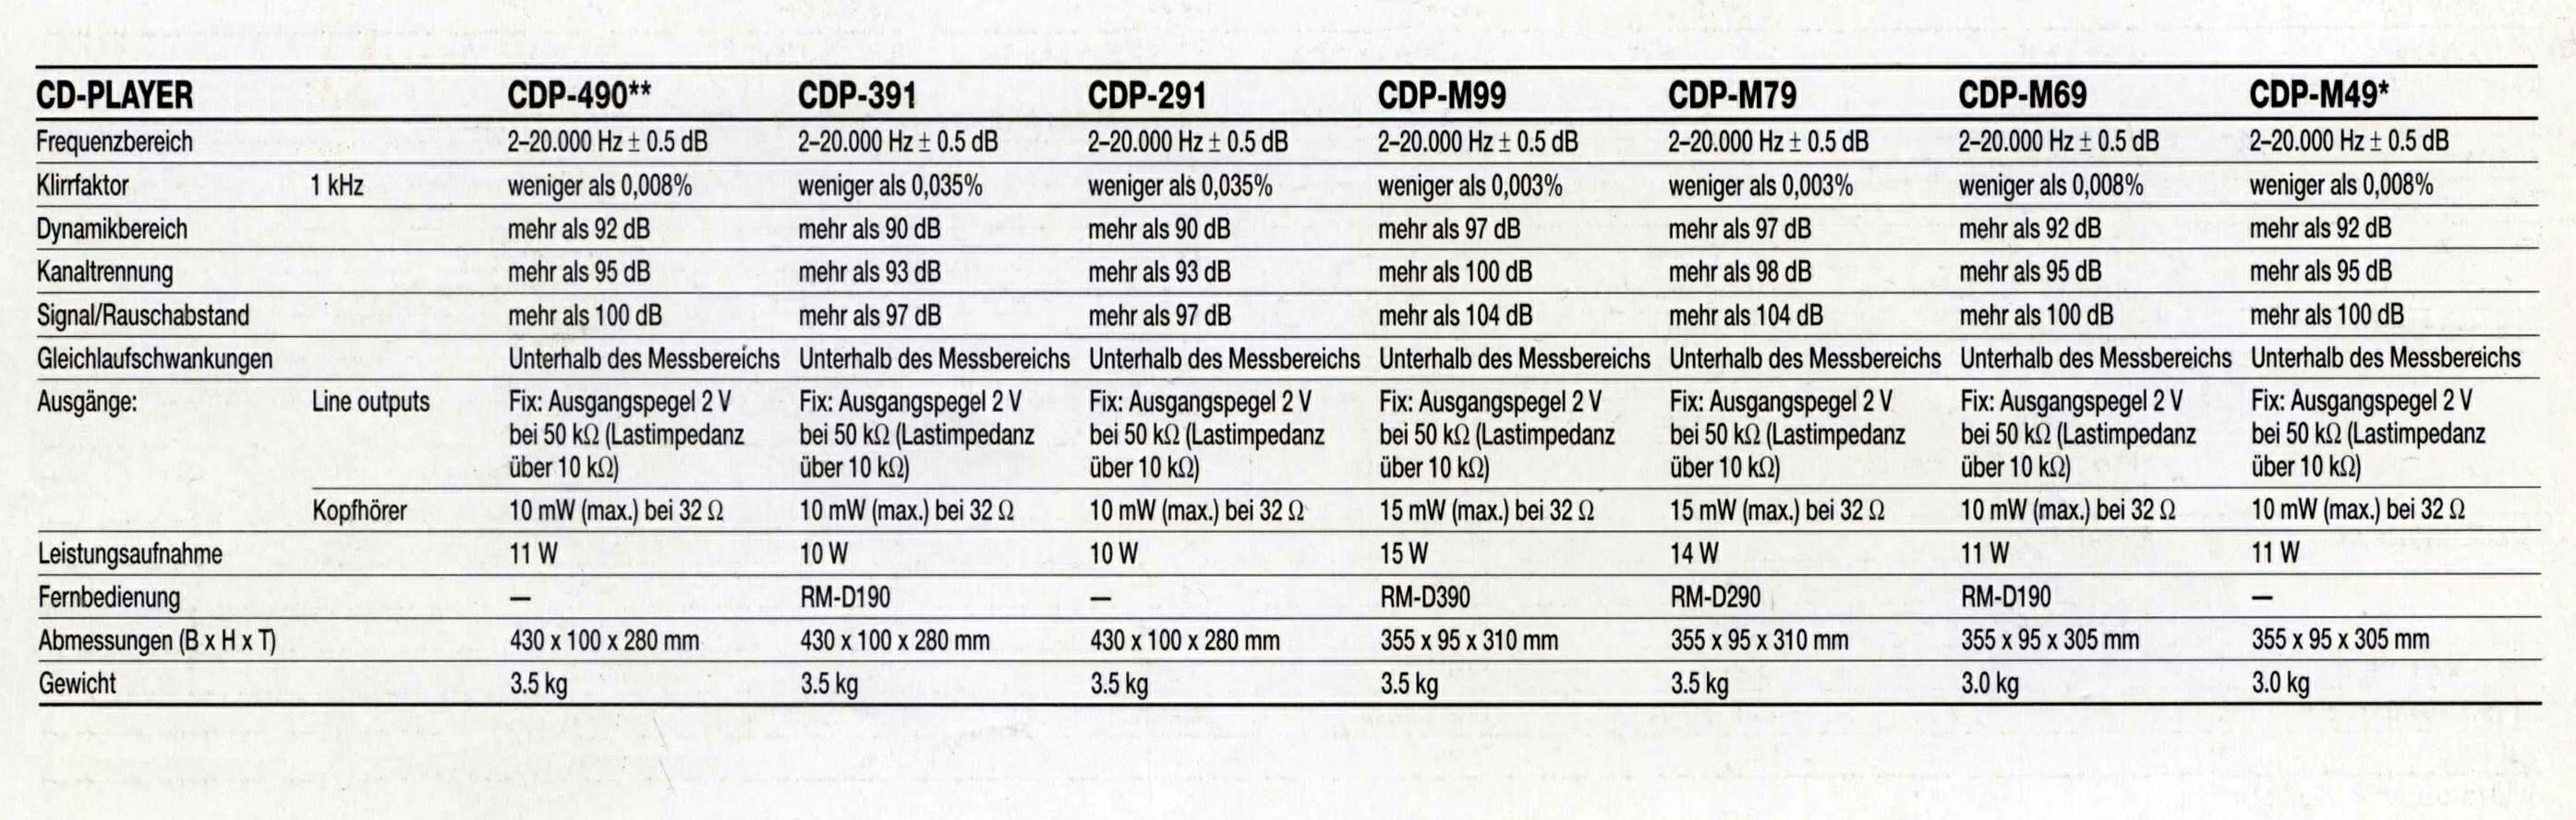 Sony CDP-291-391-490-M 49-69-79-99-Daten 19911.jpg